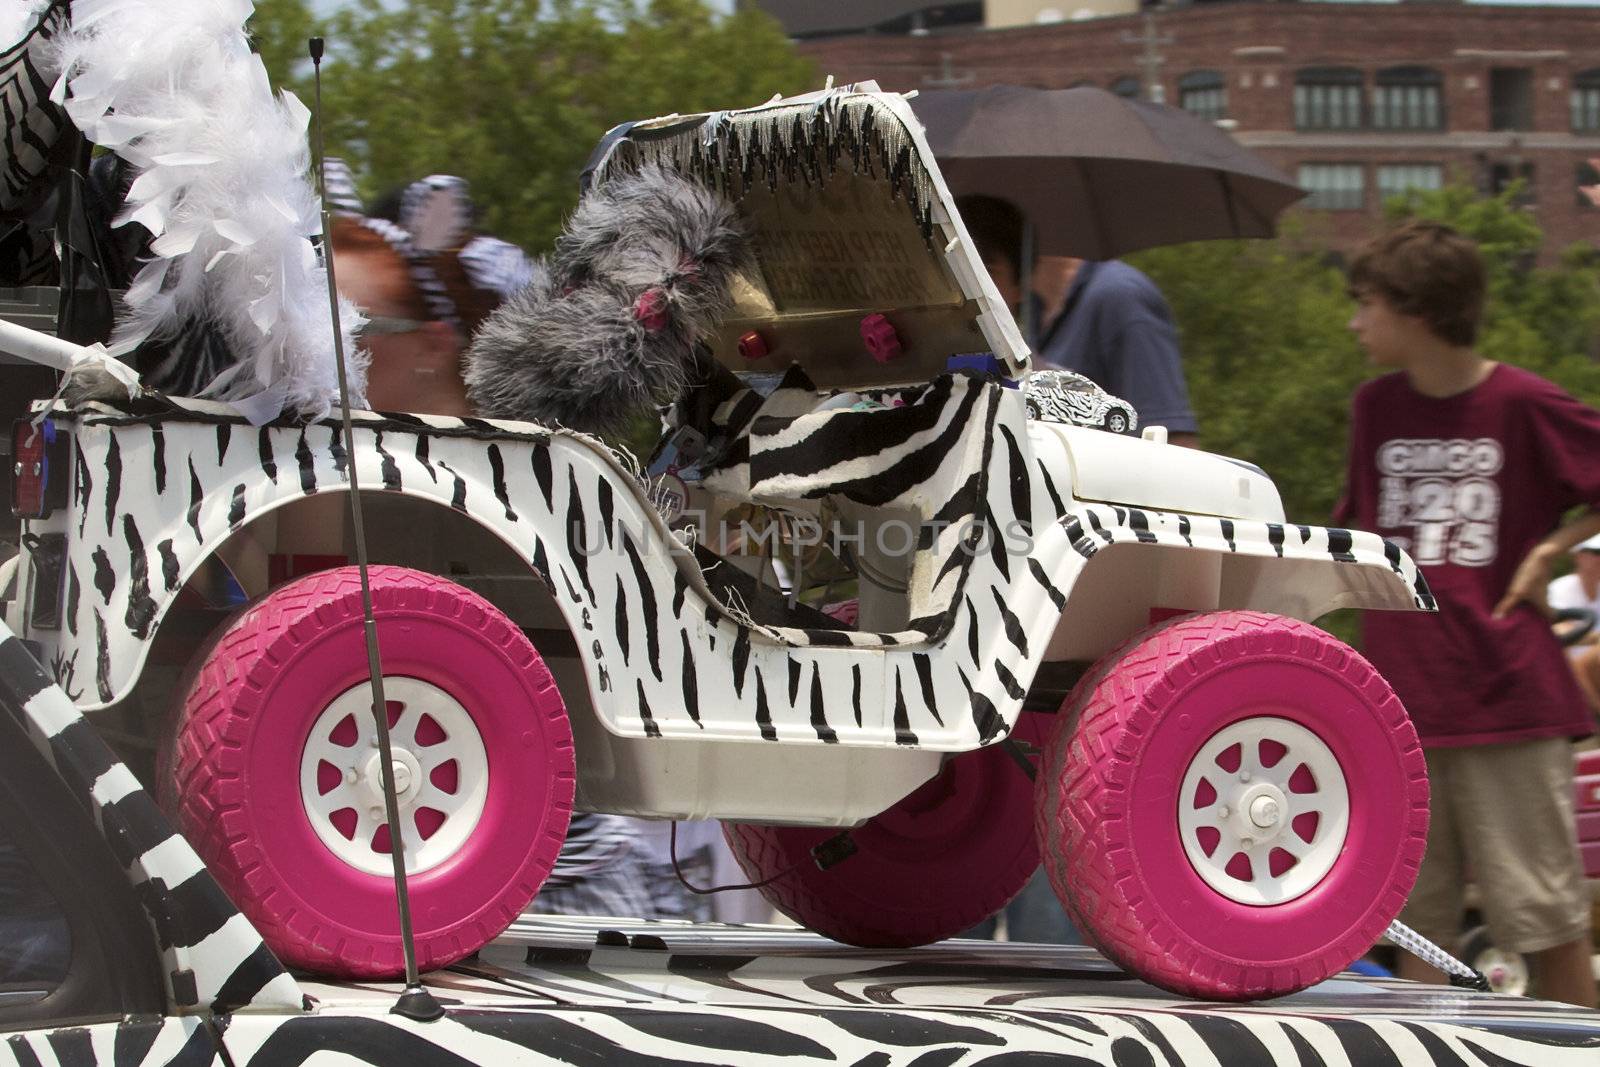 2011 Houston Art Car Parade by rrcolejrphoto